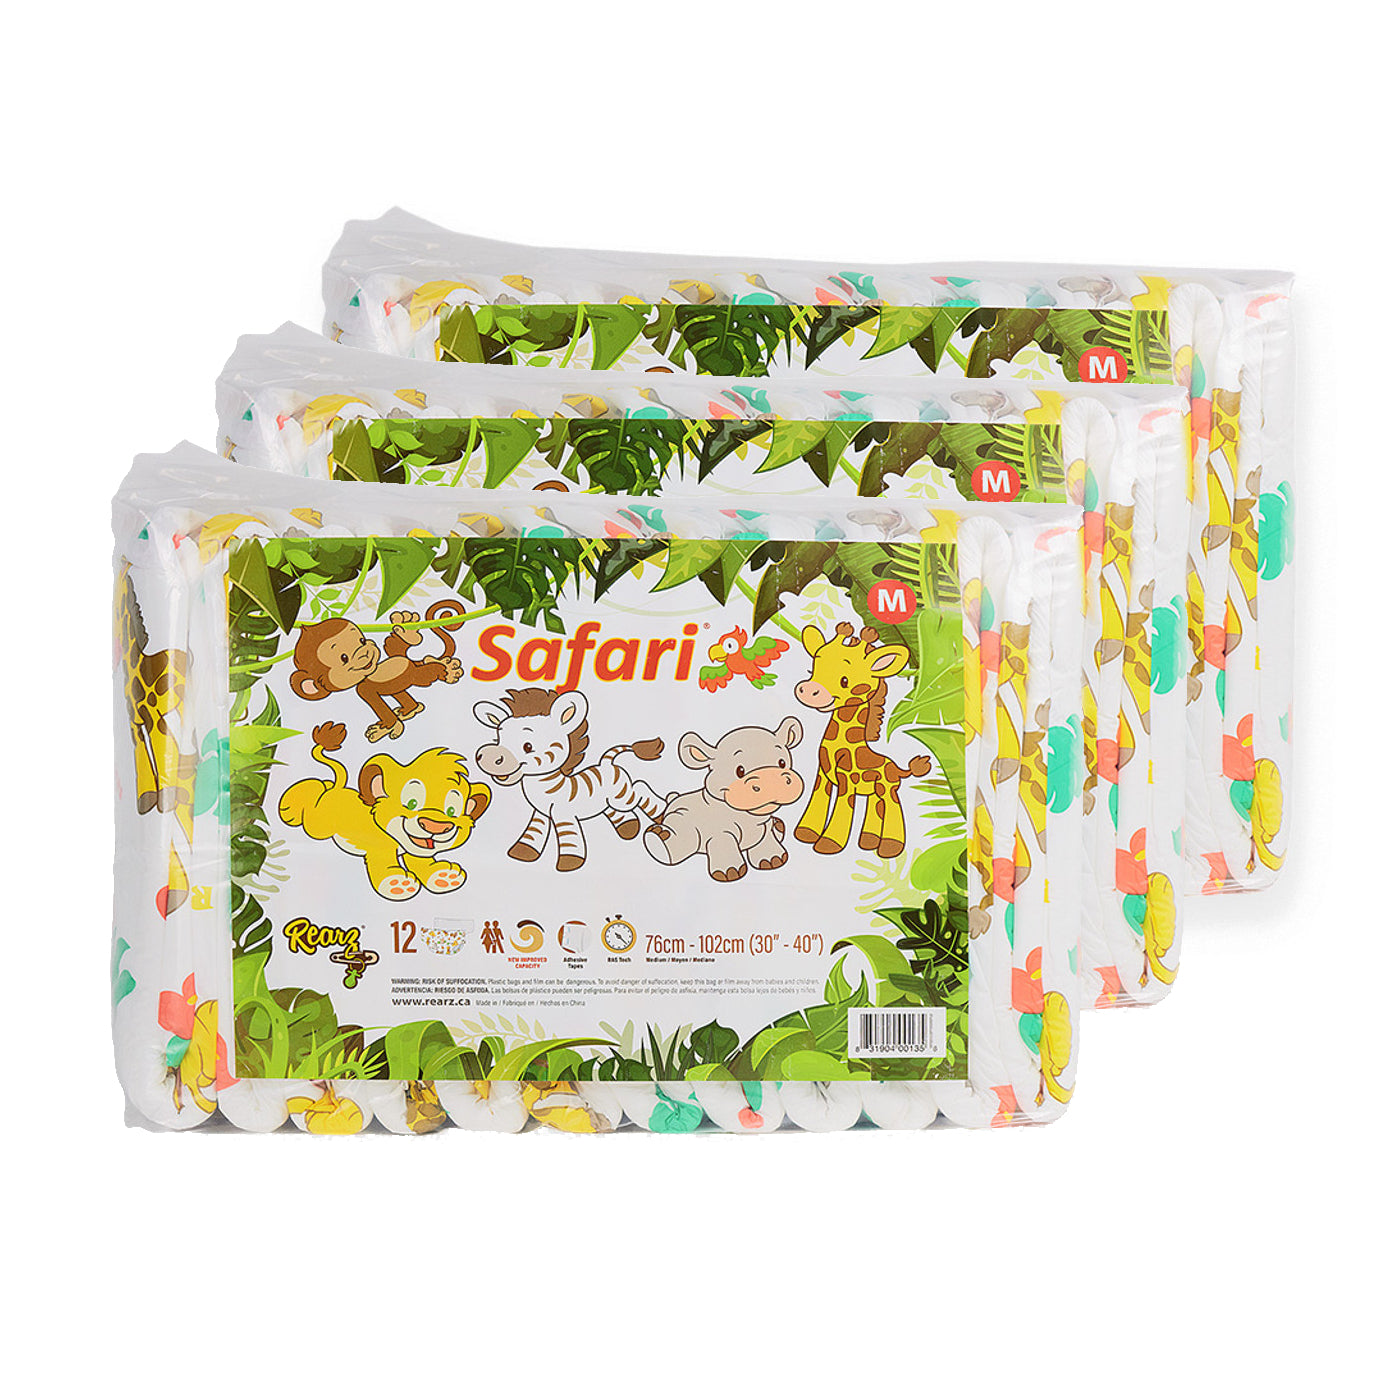 Rearz - Nighttime Adult Diapers - Mega Safari